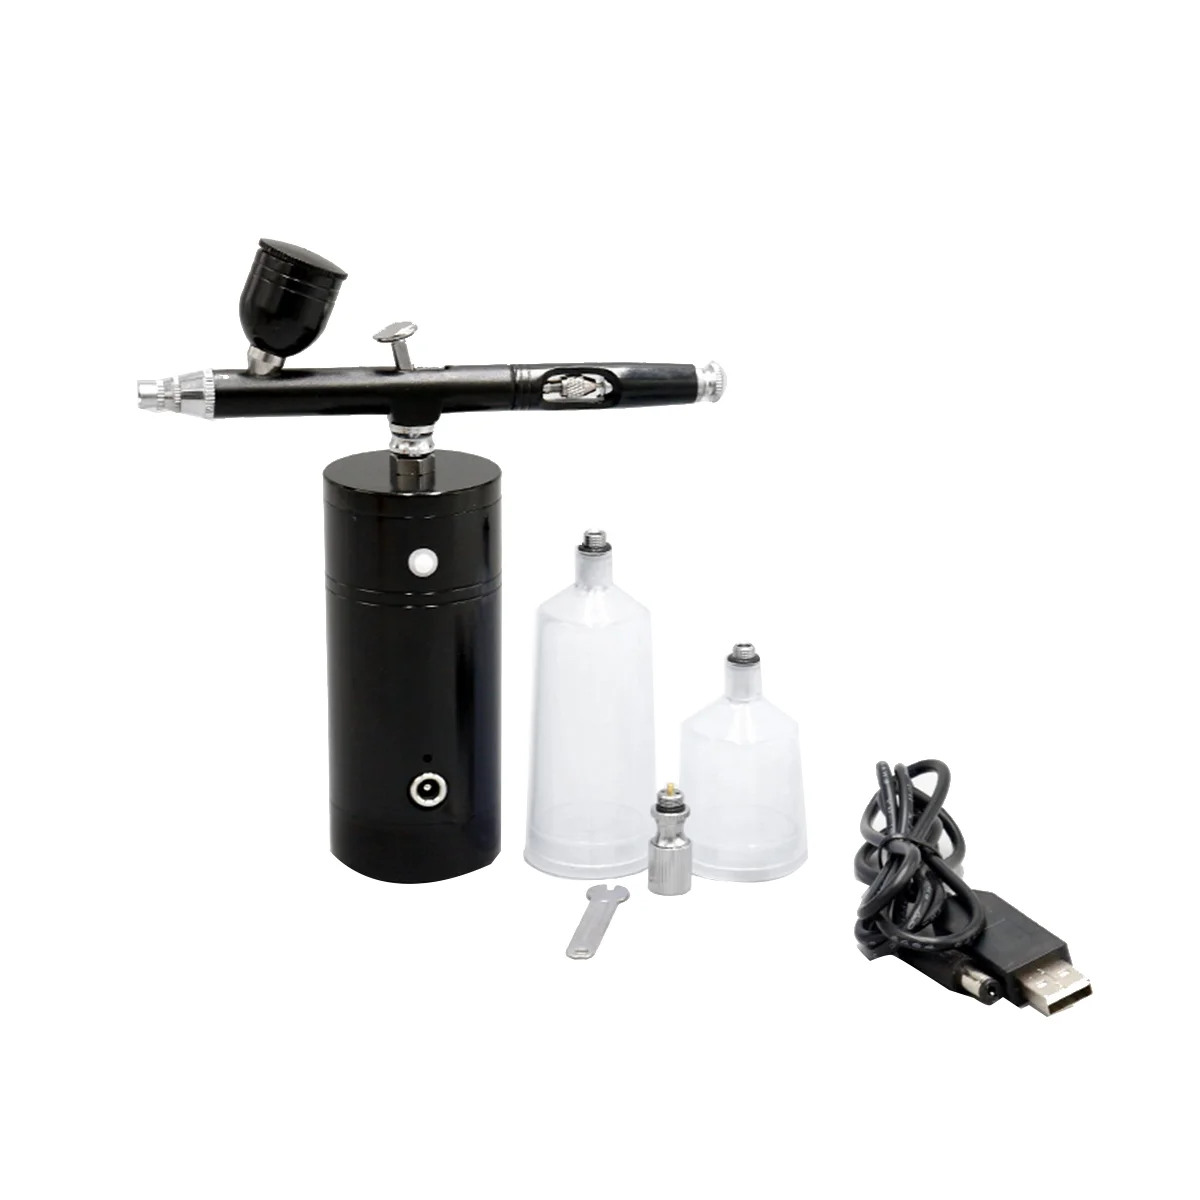 

Multi- Airbrush Air Compressor Kit Dual Action 0.3mm Nozzle 7CC Capacity Paint Spray Sprayer Kit